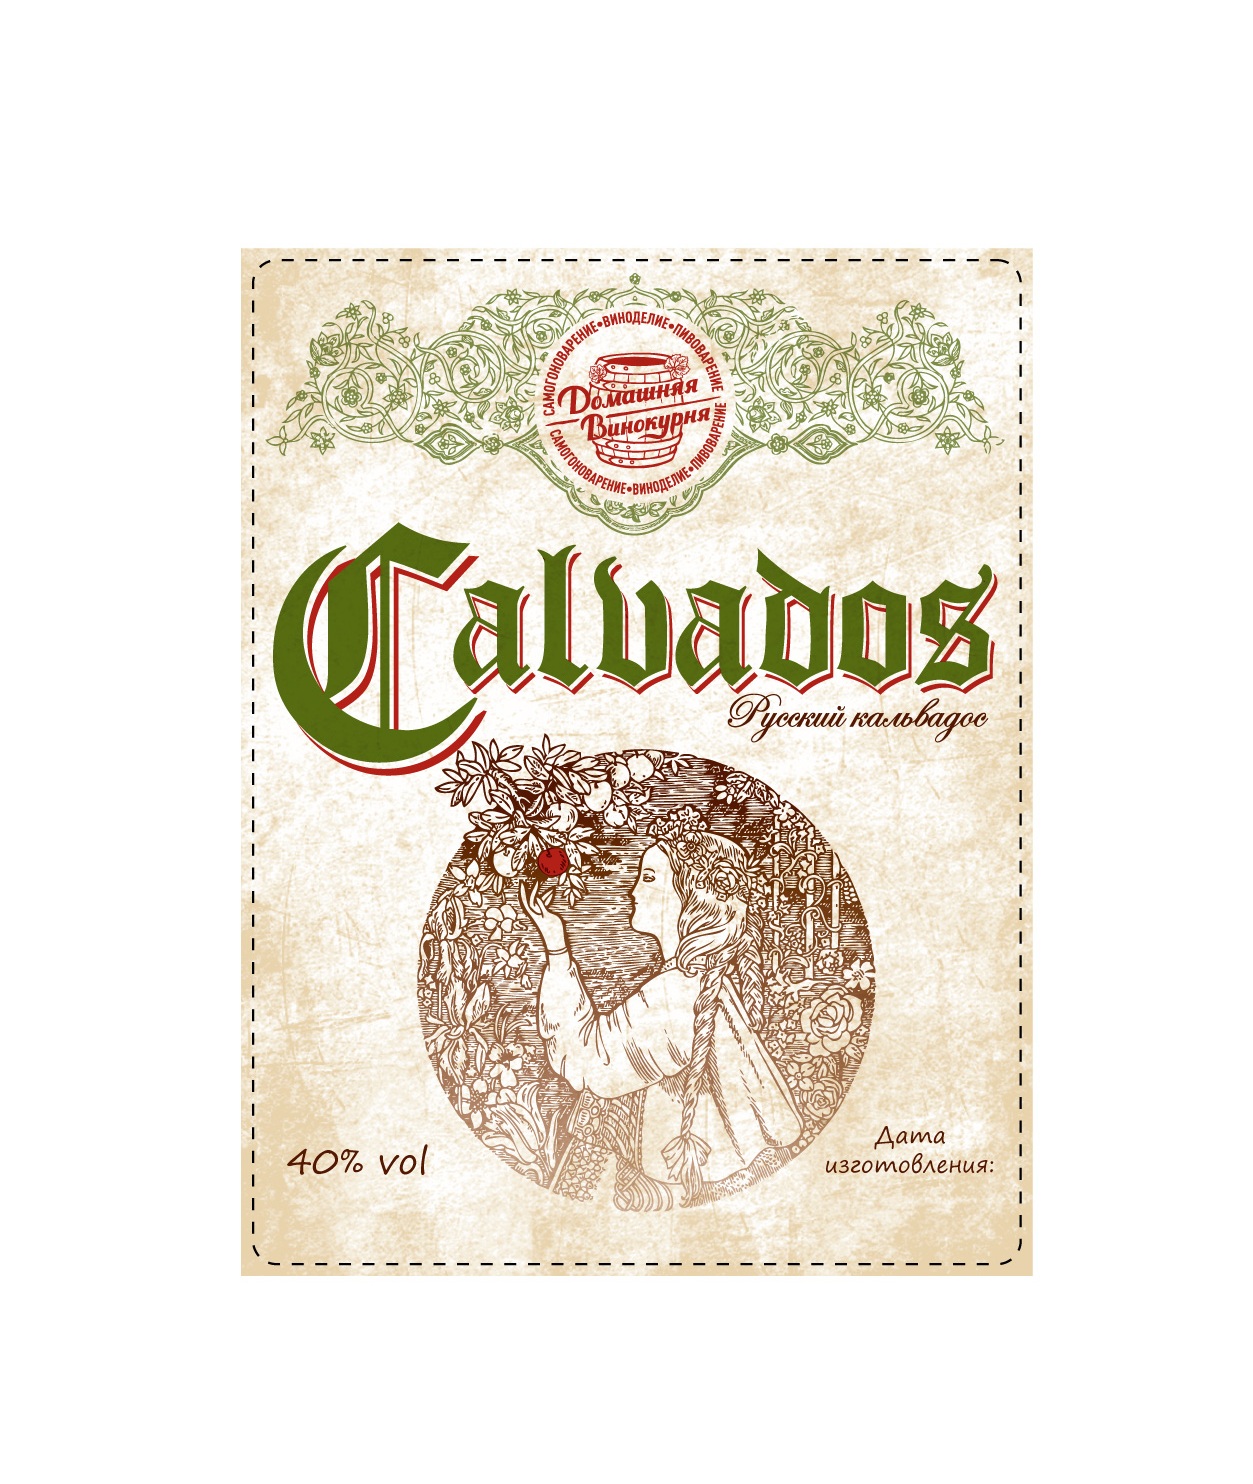 Наклейка на бутылку "Кальвадос"